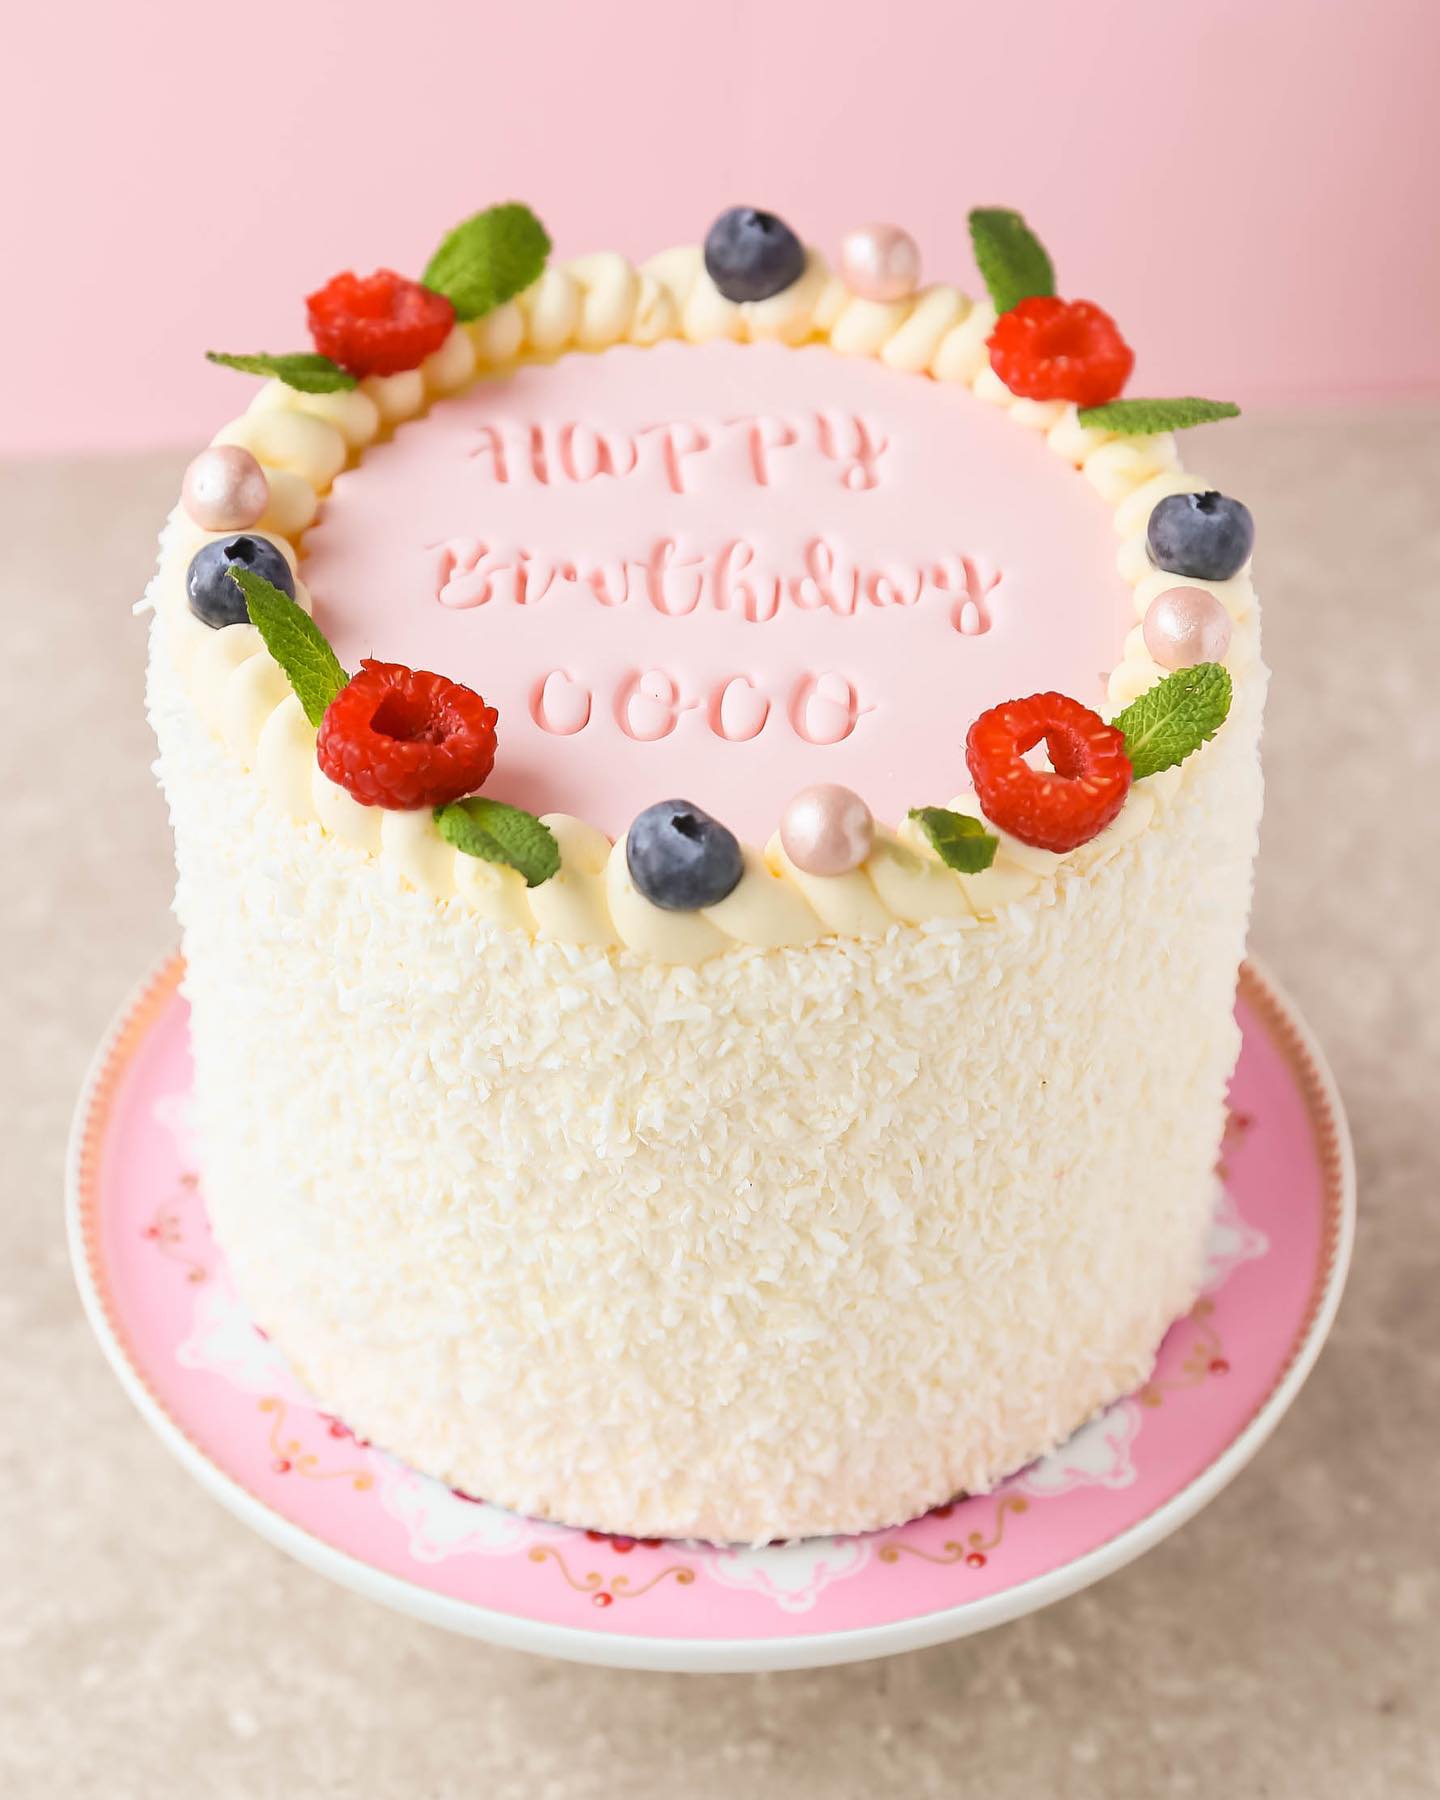 Secrettaart Happy Birthday To You Cake Patisserie Shop Based In Newcastle Upon Tyne